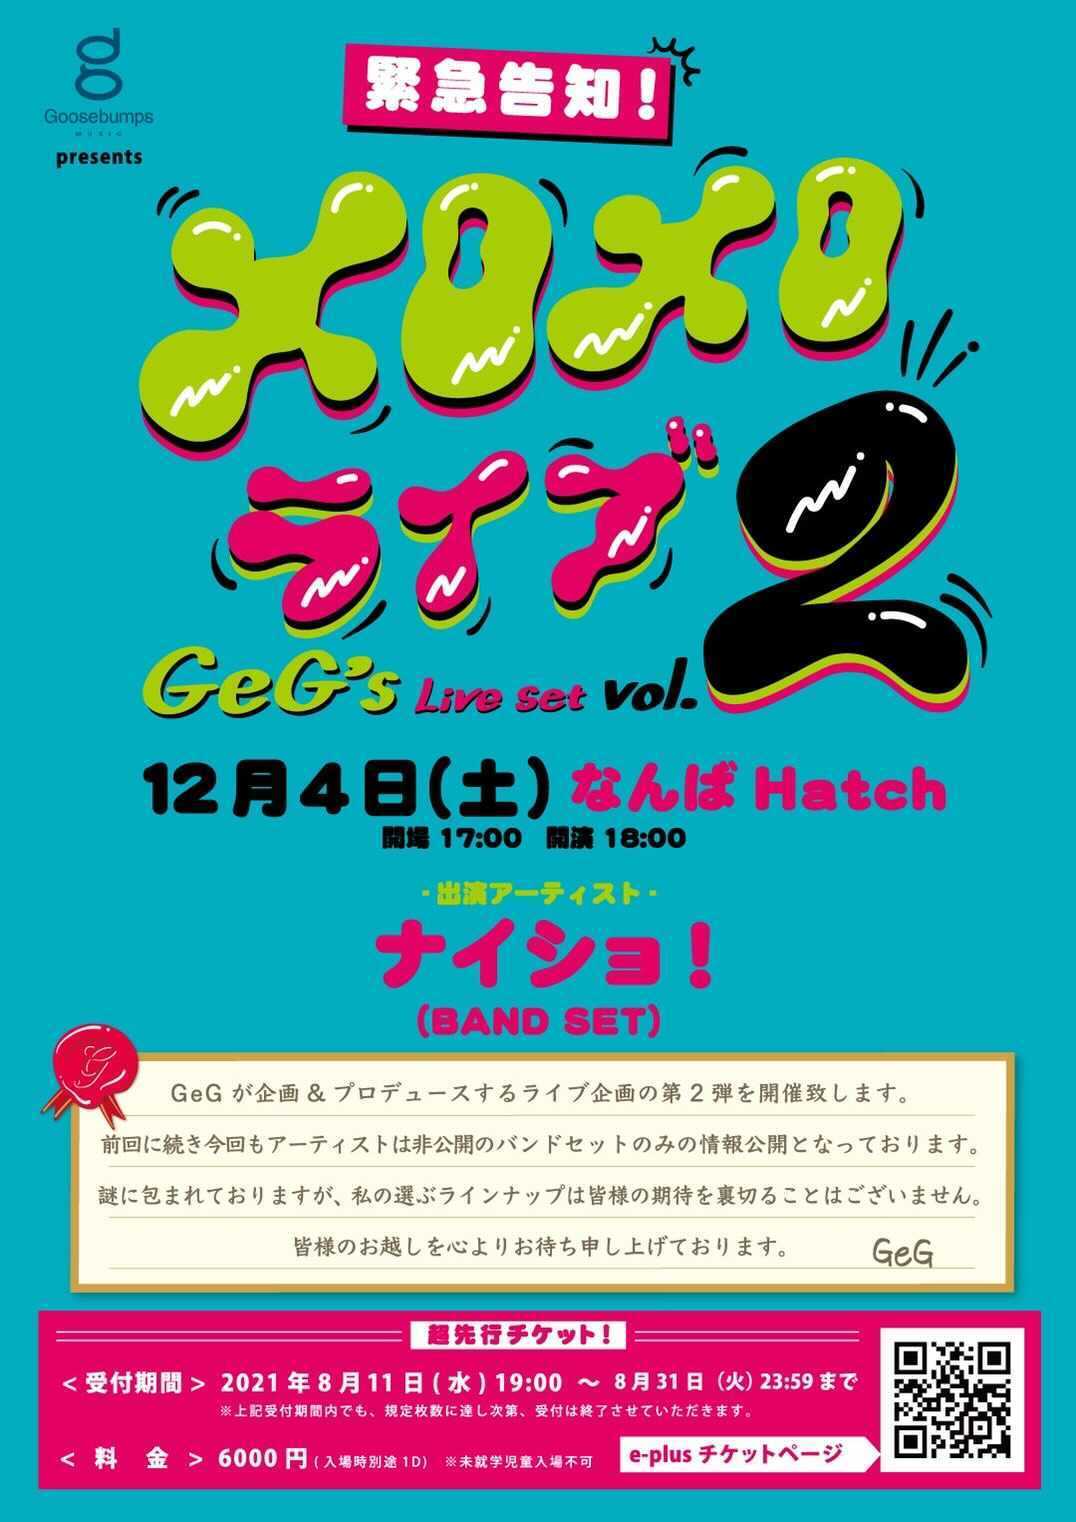 "Goosebumps Music presents" メロメロライブ ~GeG's Live Set vol.2~ フライヤー